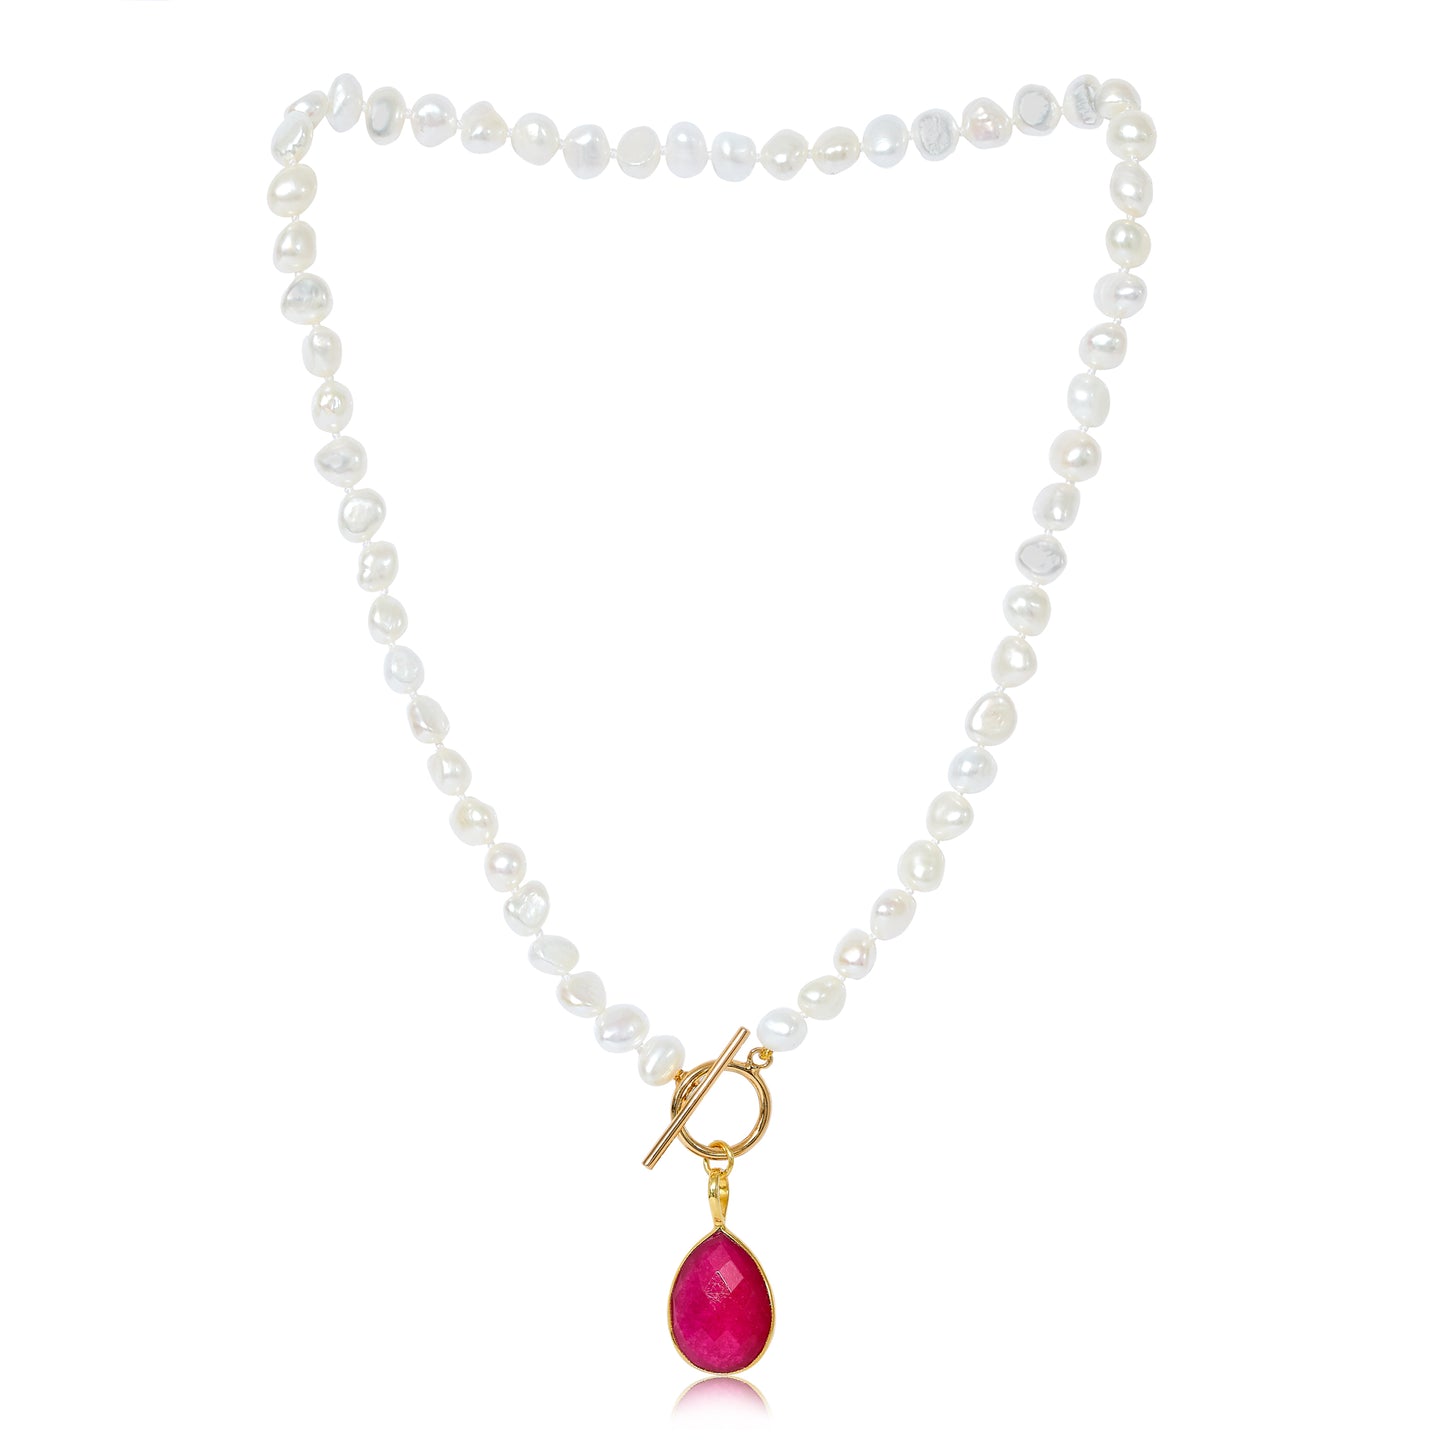 Clara cultured irregular freshwater pearl necklace with ruby quartz gold vermeil drop